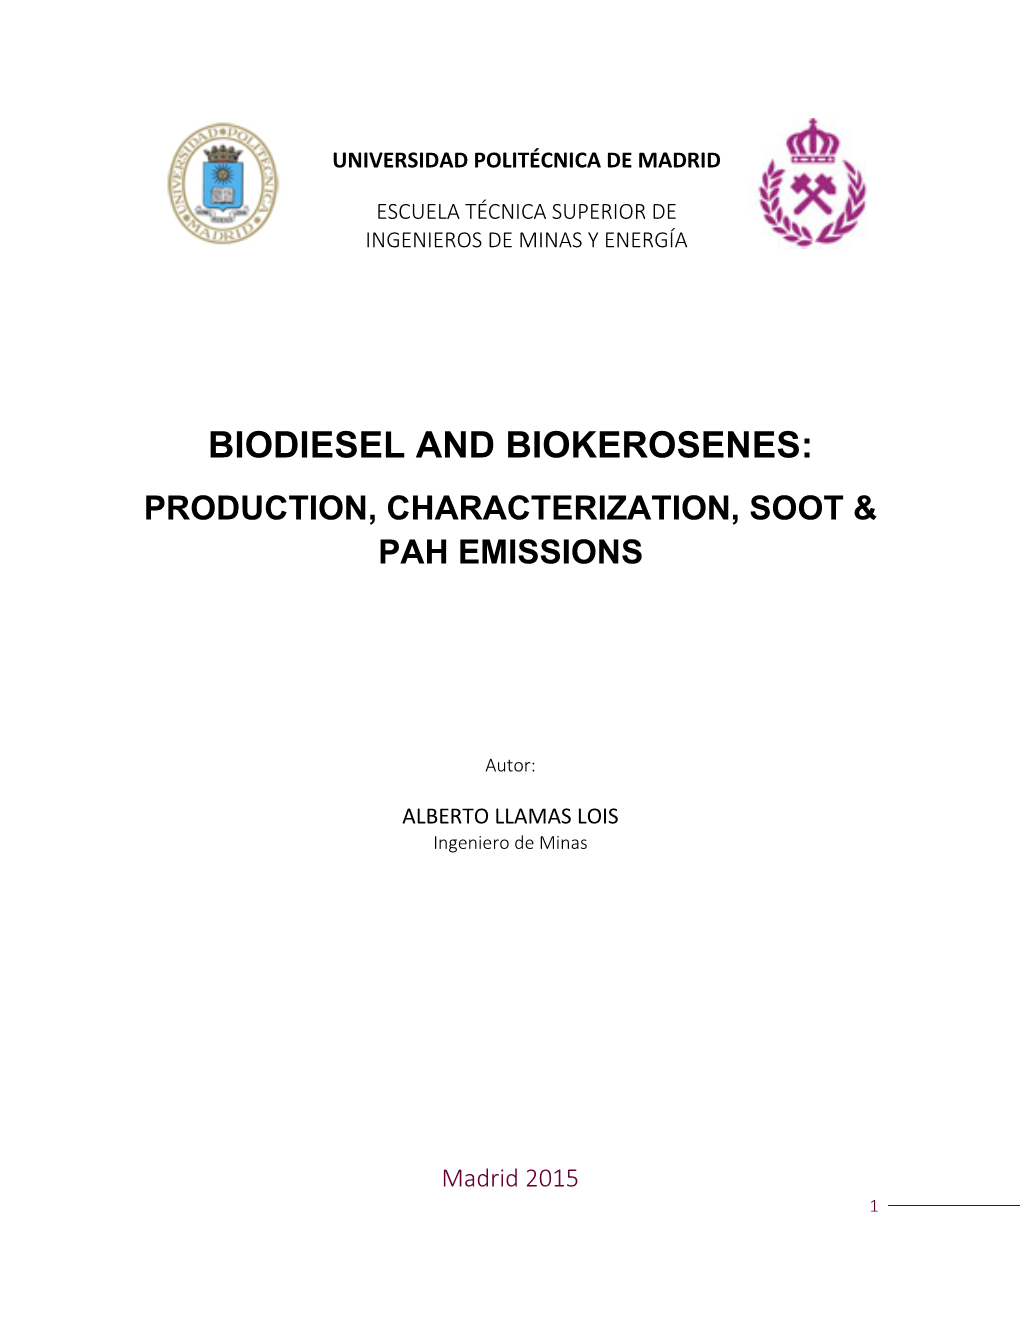 Biodiesel and Biokerosenes: Production, Characterization, Soot & Pah Emissions